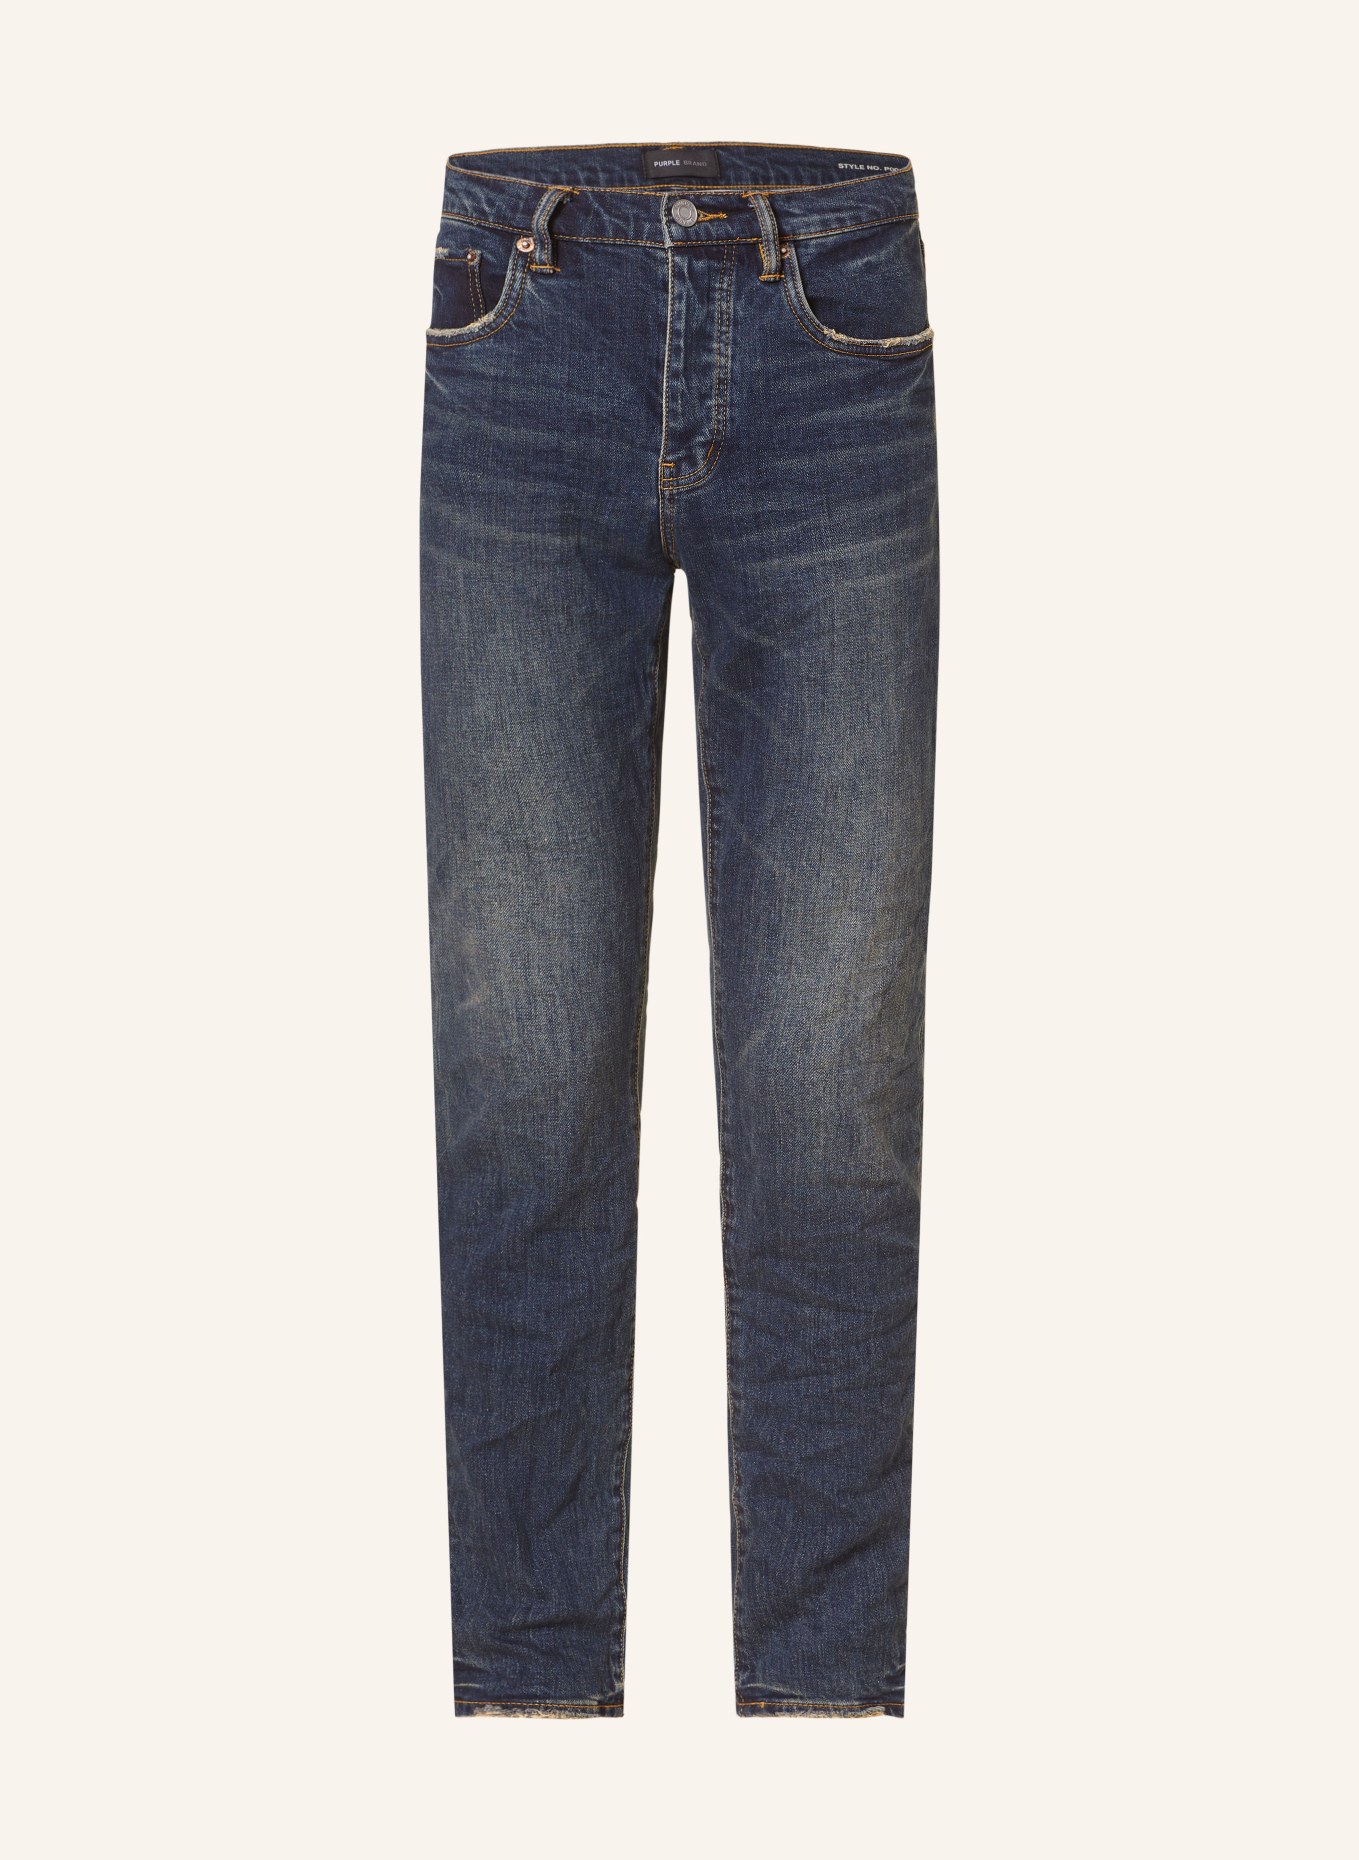 PURPLE BRAND Jeans P001 Skinny Fit, Farbe: DK INDIGO (Bild 1)